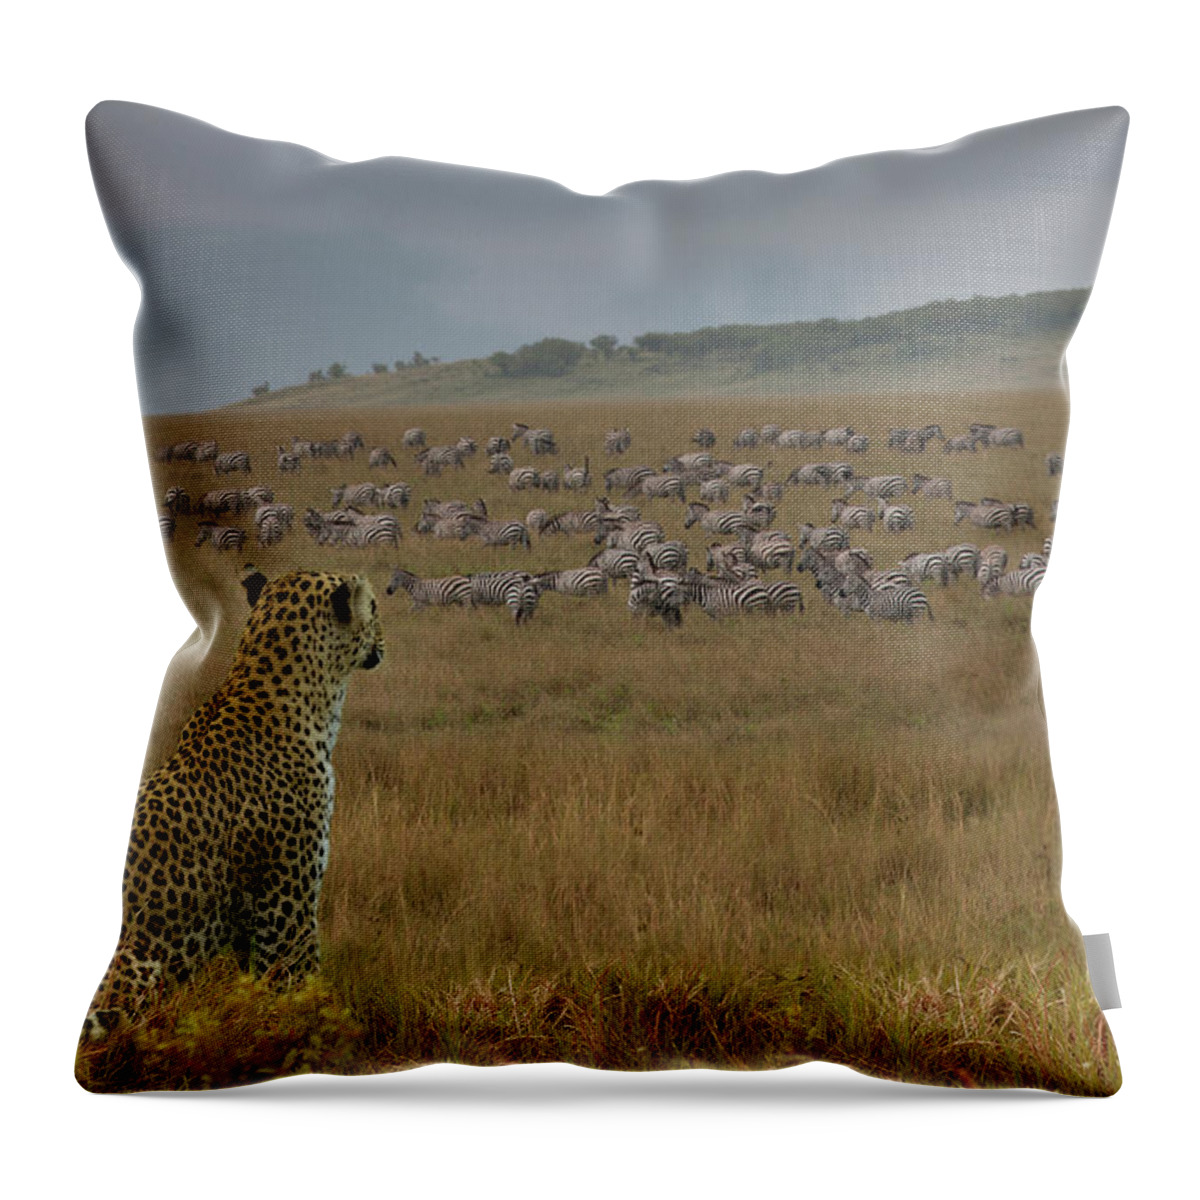 Plains Zebra Throw Pillow featuring the photograph Leopard Panthera Pardus Watching Zebras by Buena Vista Images